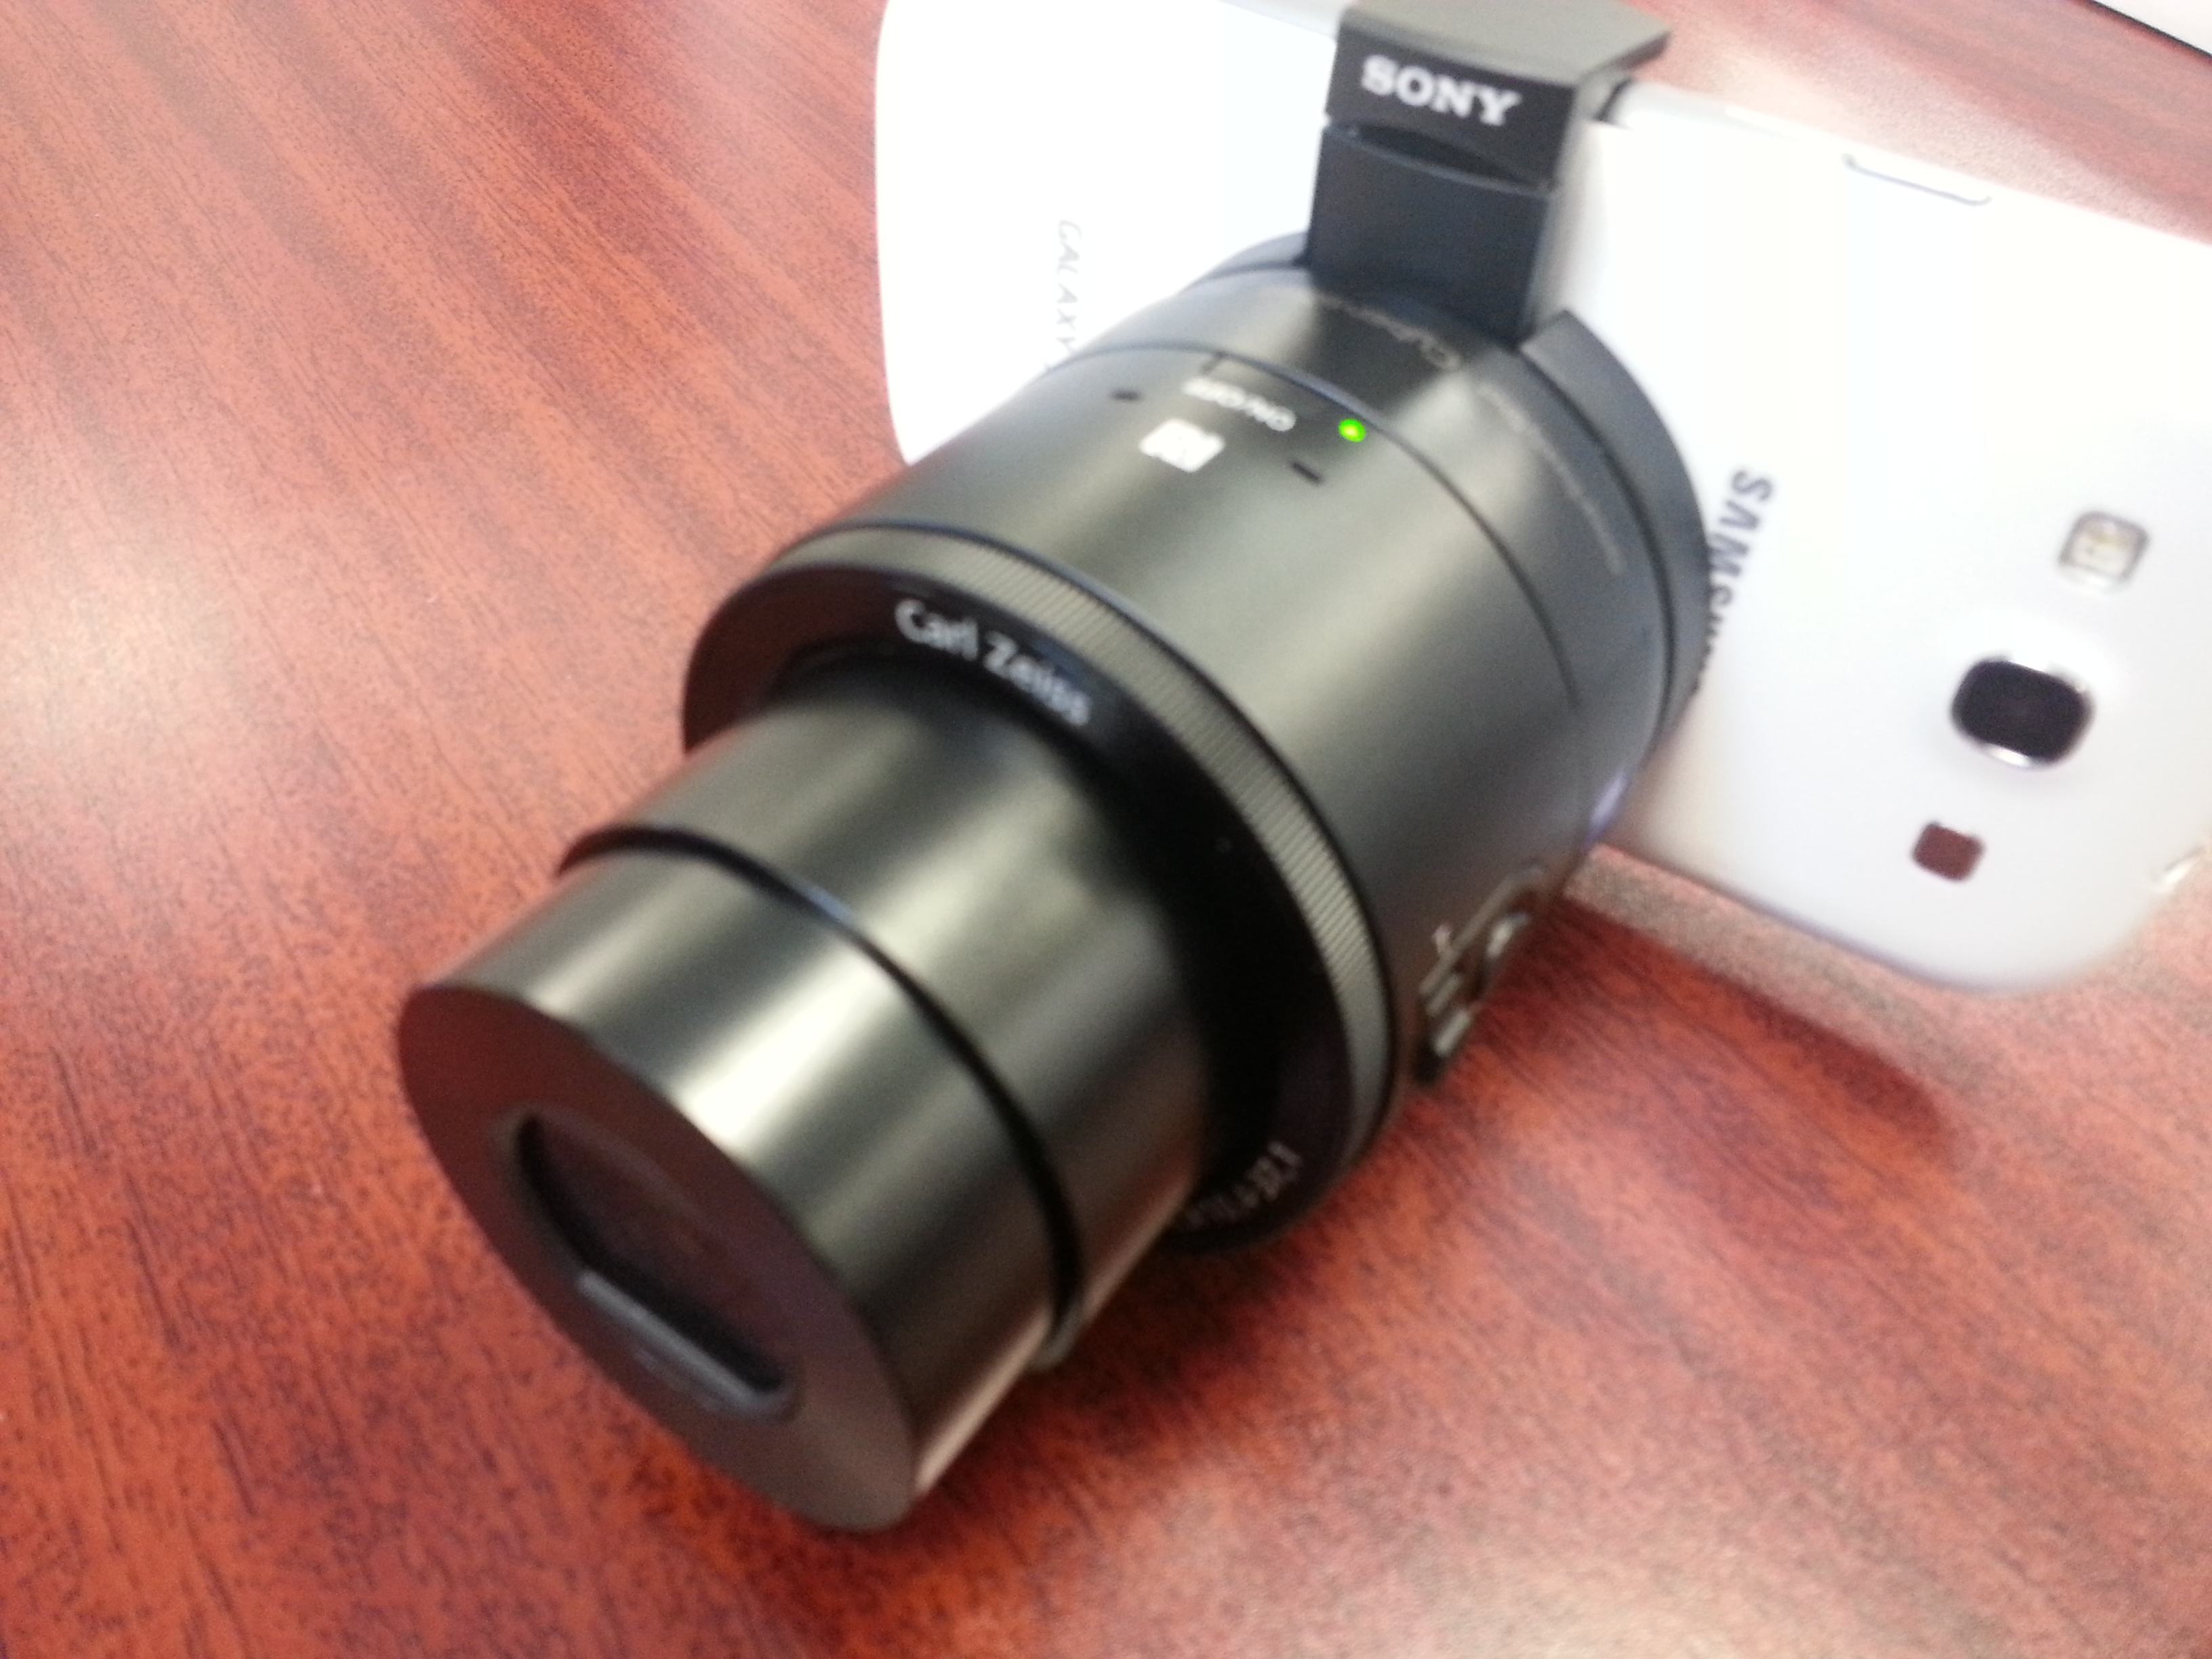 Sony DSC-QX100 Lens-Style Digital Camera